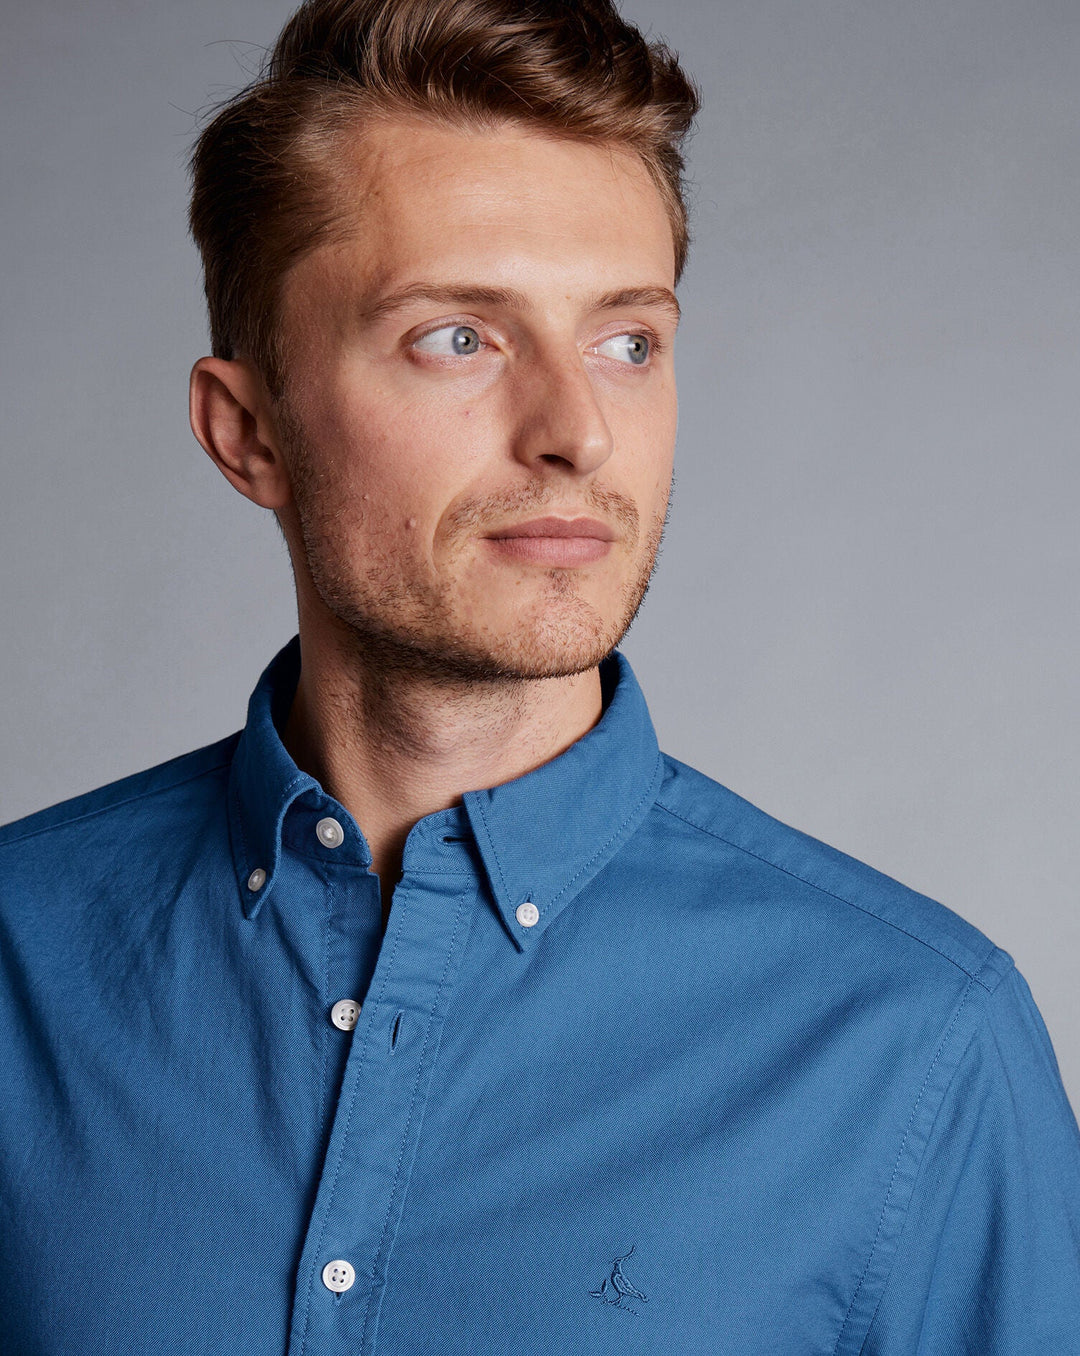 Charles Tyrwhitt Ocean Blue Plain Slim Fit Button-Down Washed Oxford Shirt